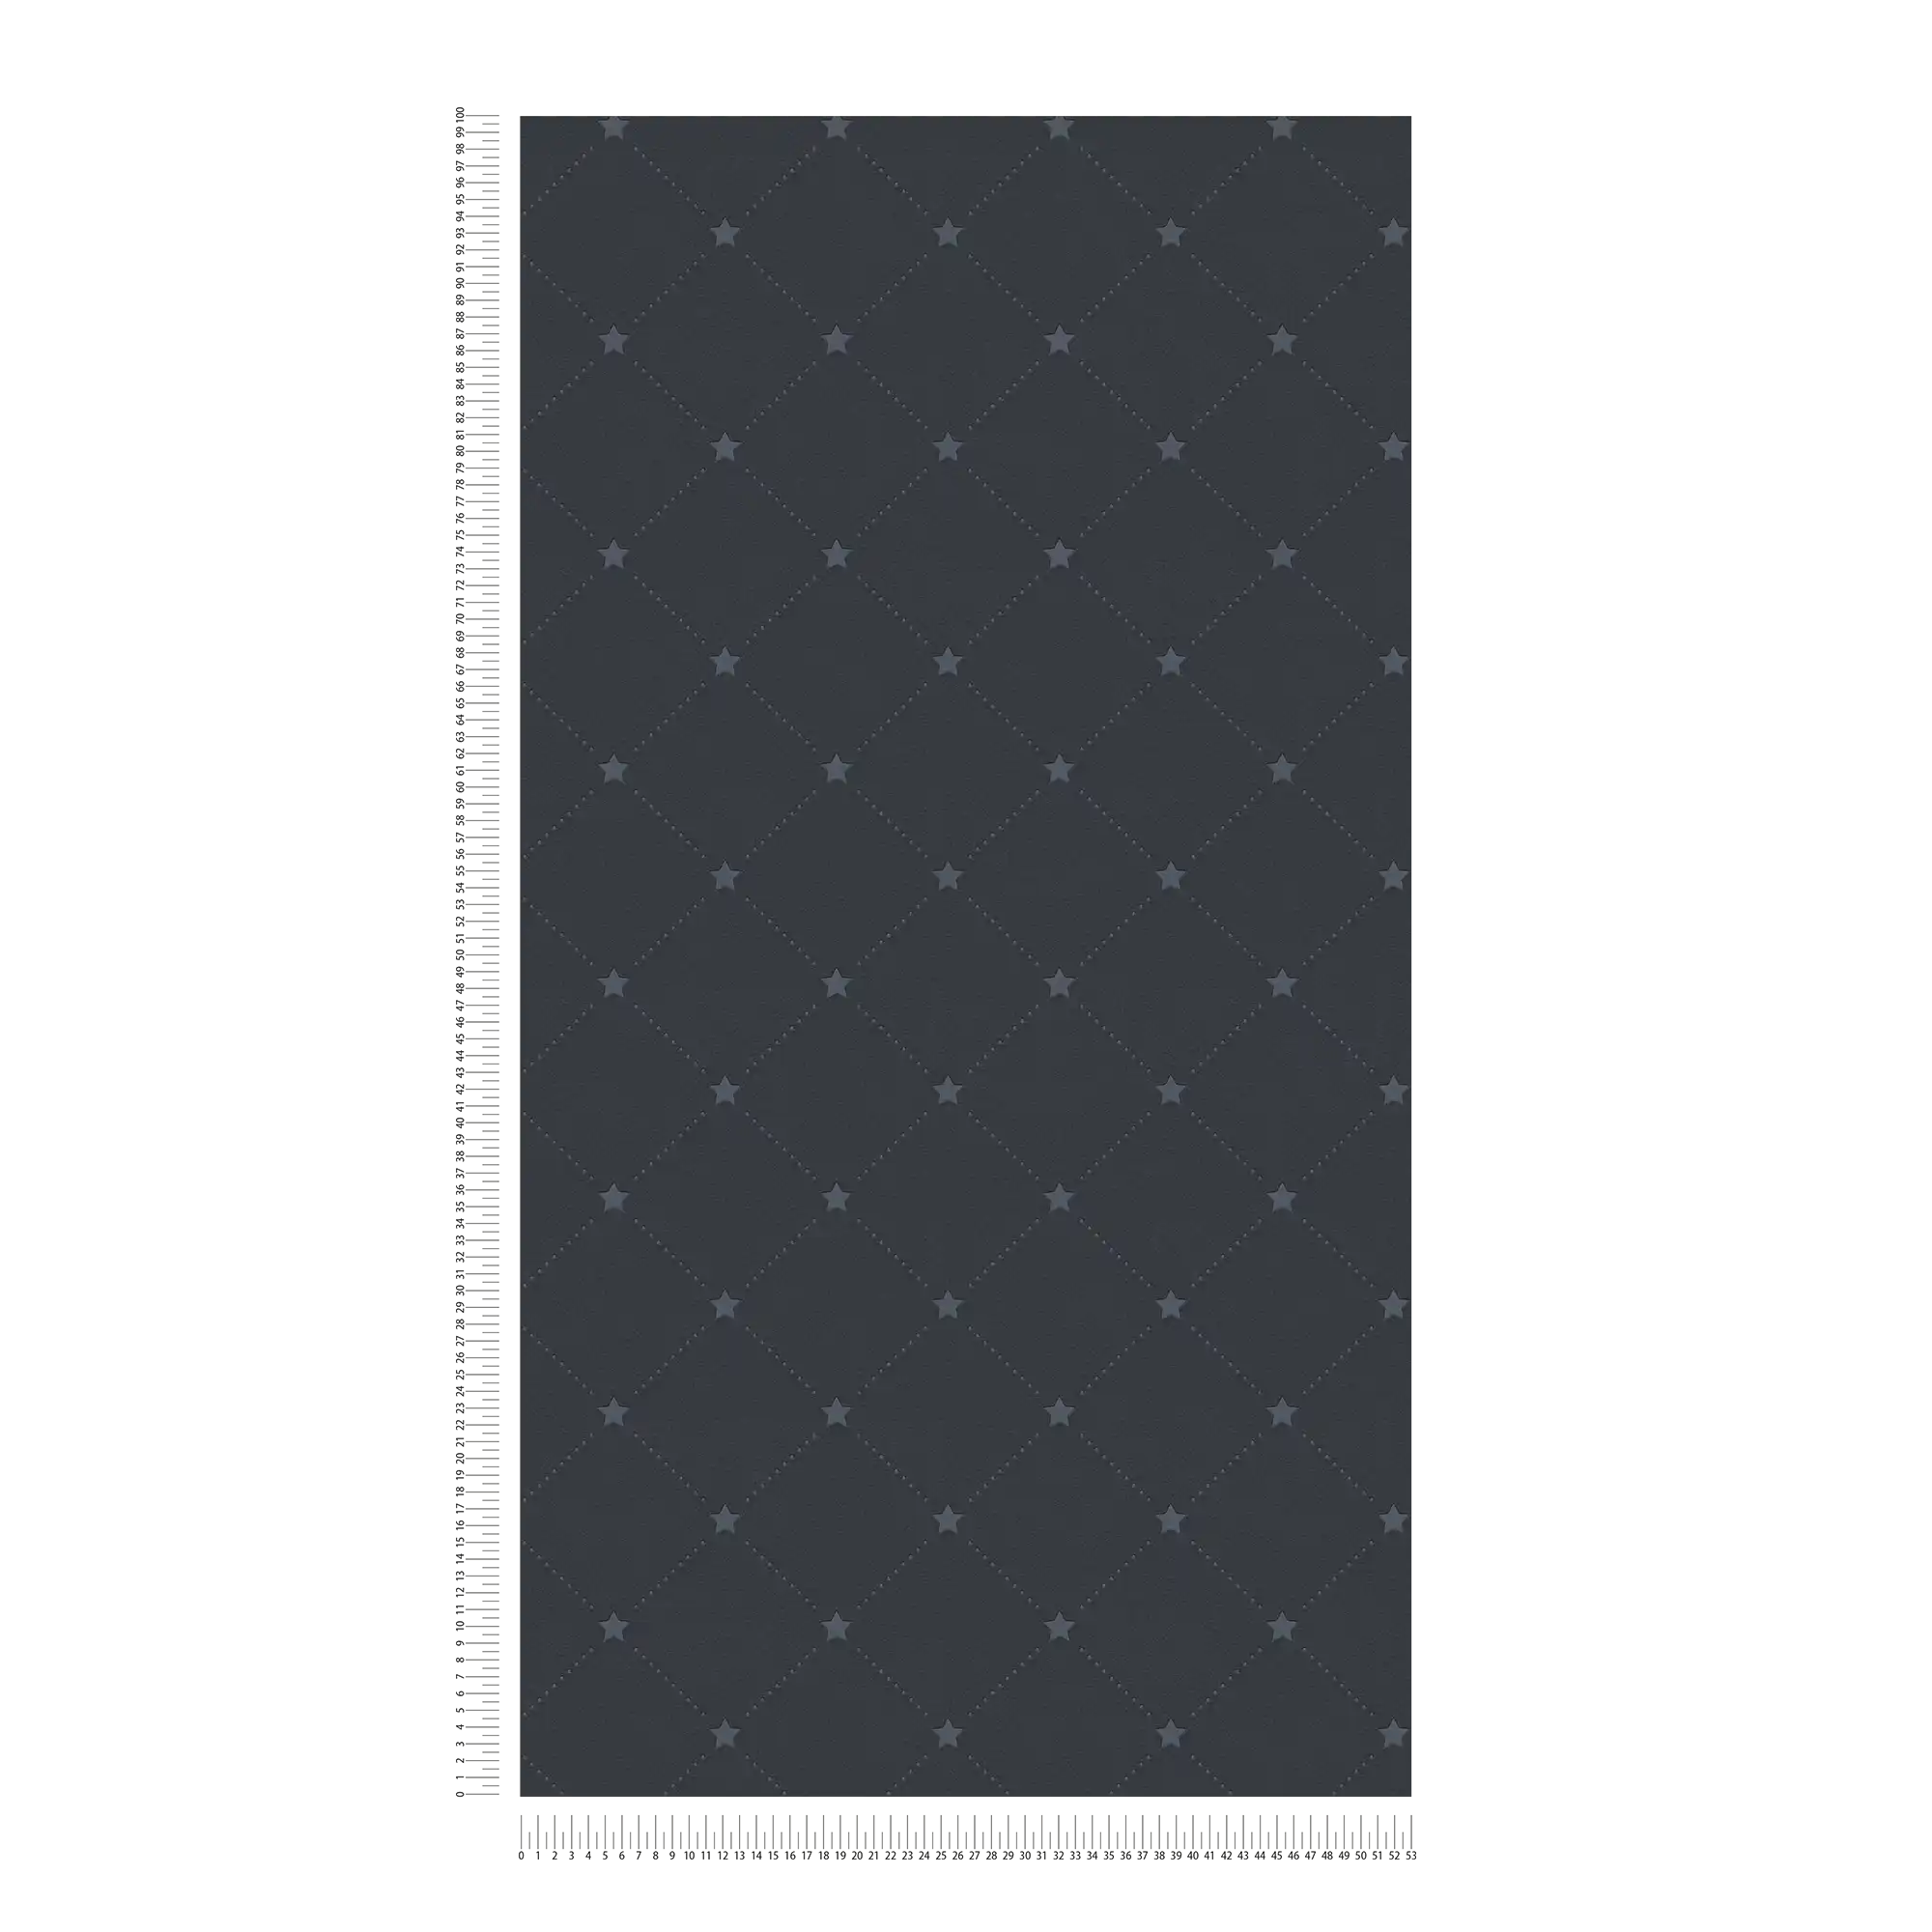             MICHALSKY non-woven wallpaper dark blue with stars pattern
        